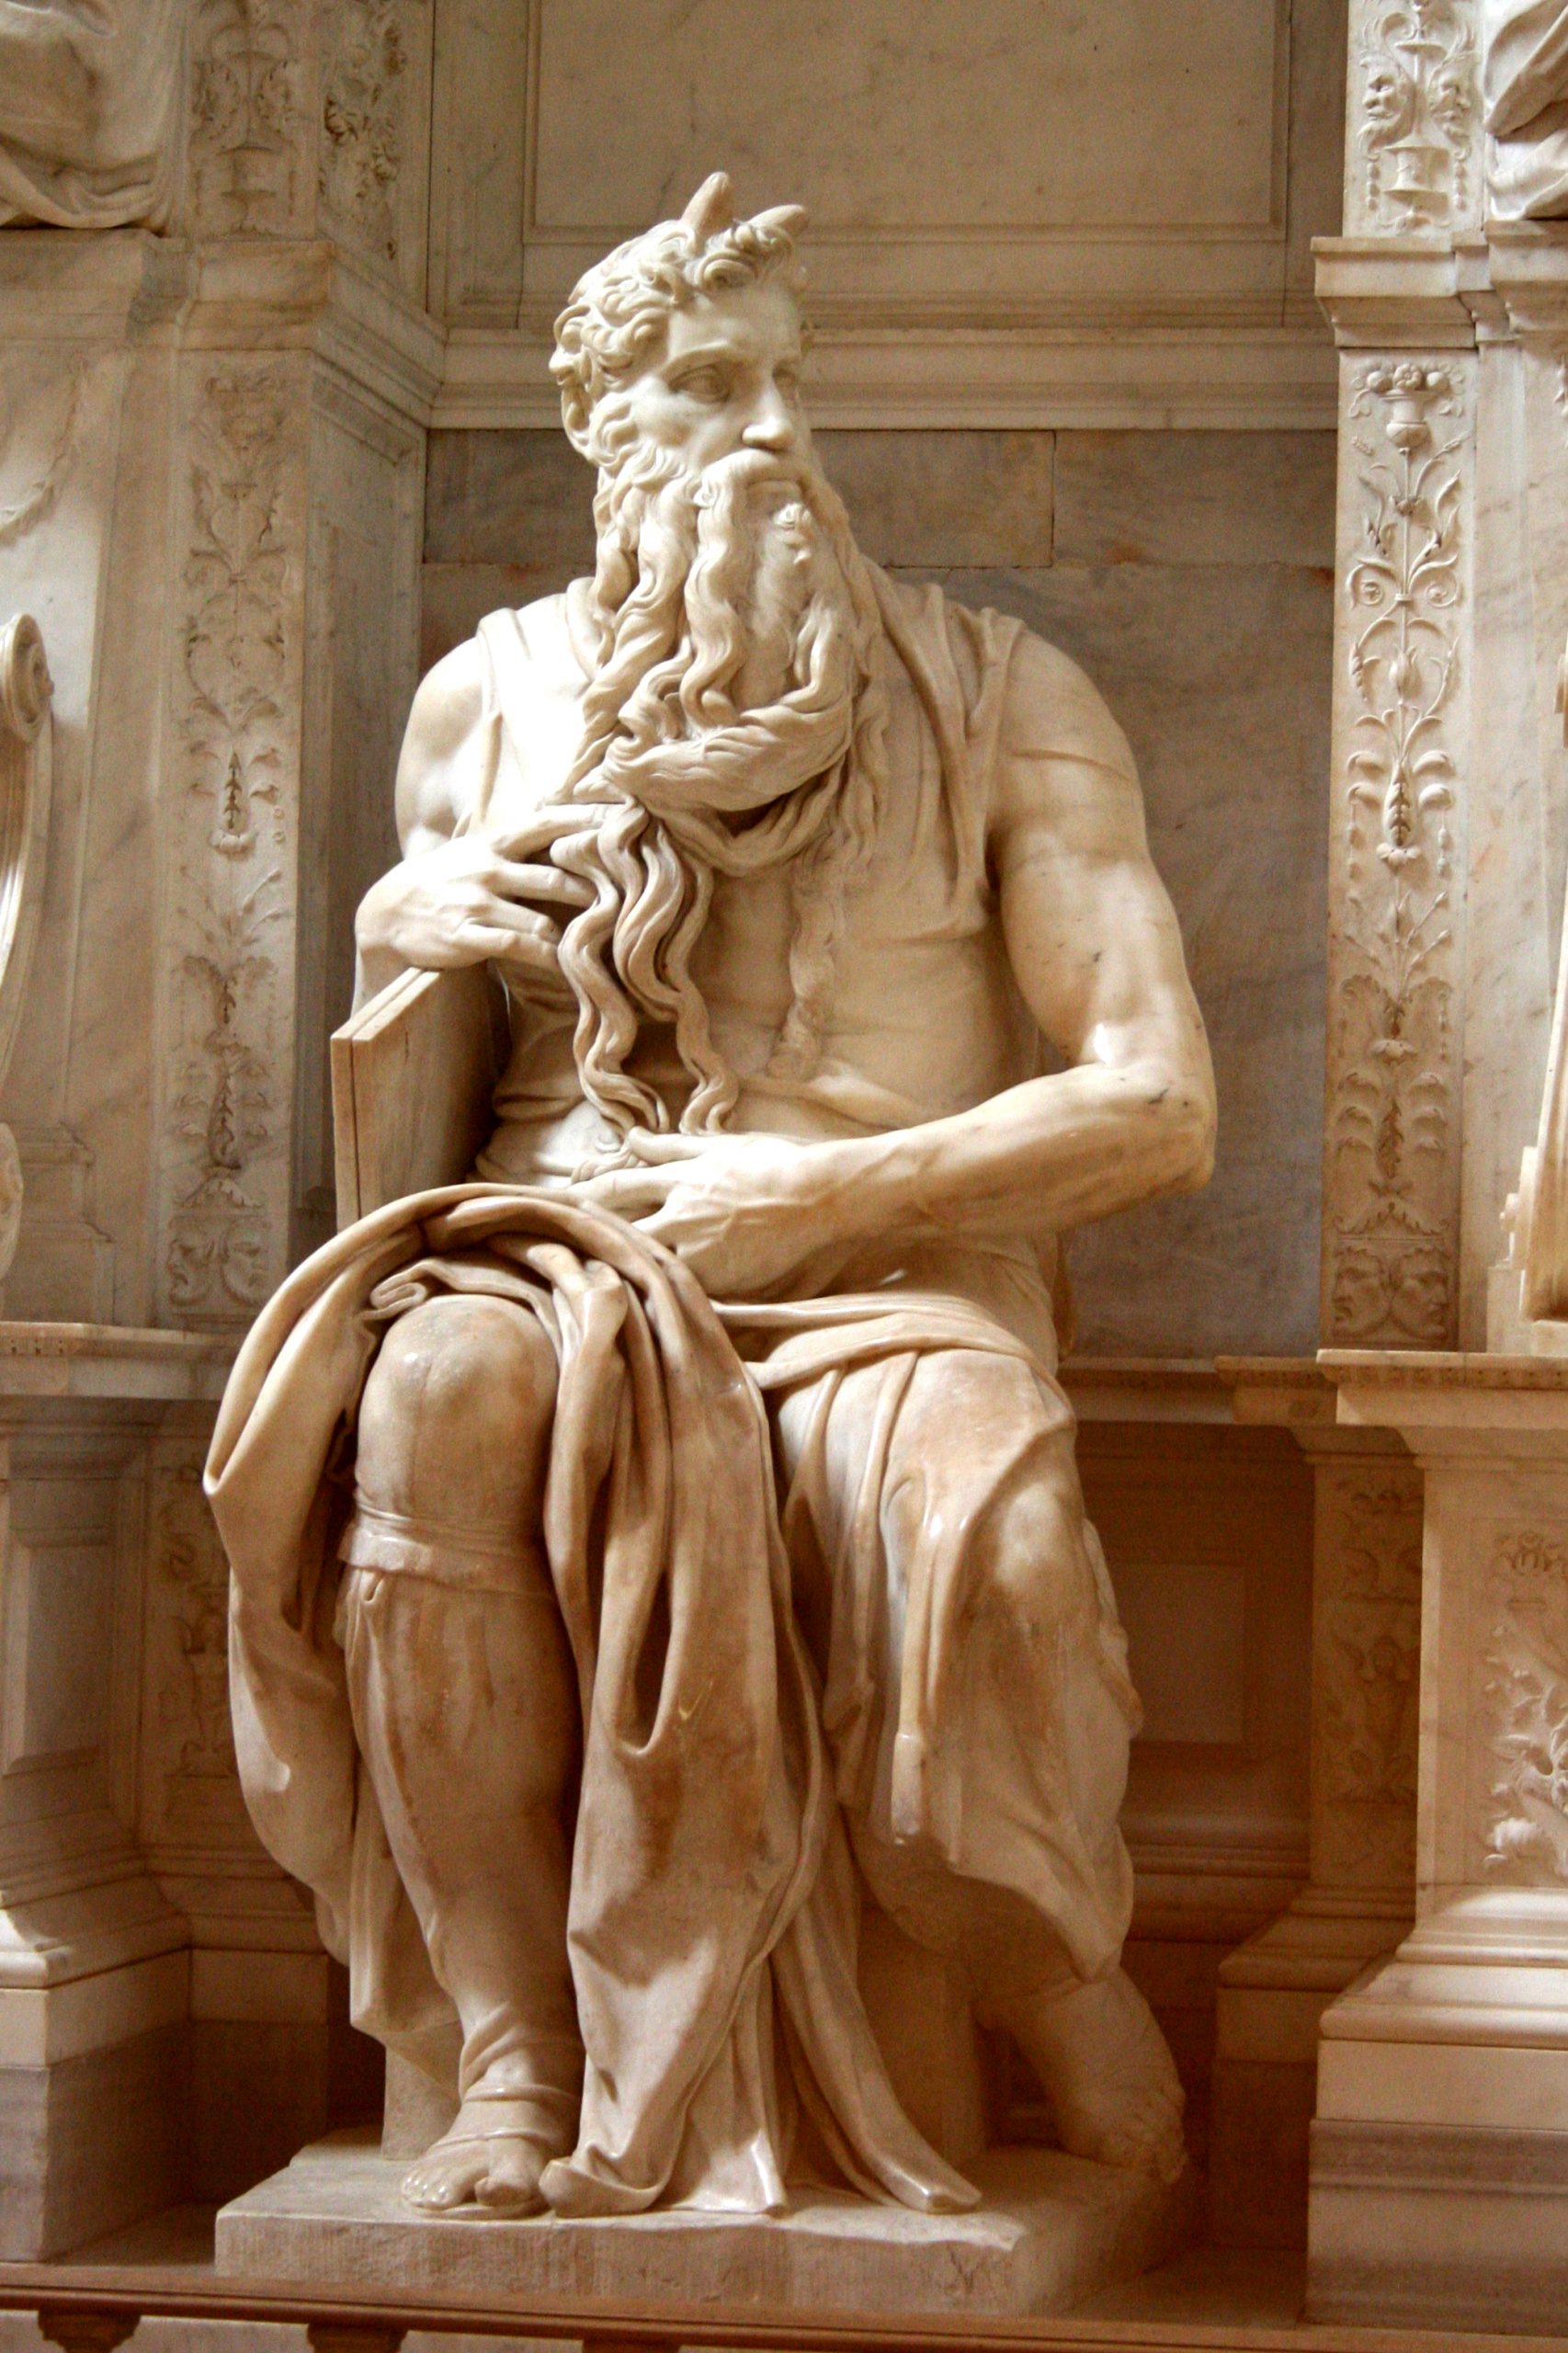 2007, Michelangelo, Moses, San Pietro in Vincoli, Rome, Italy